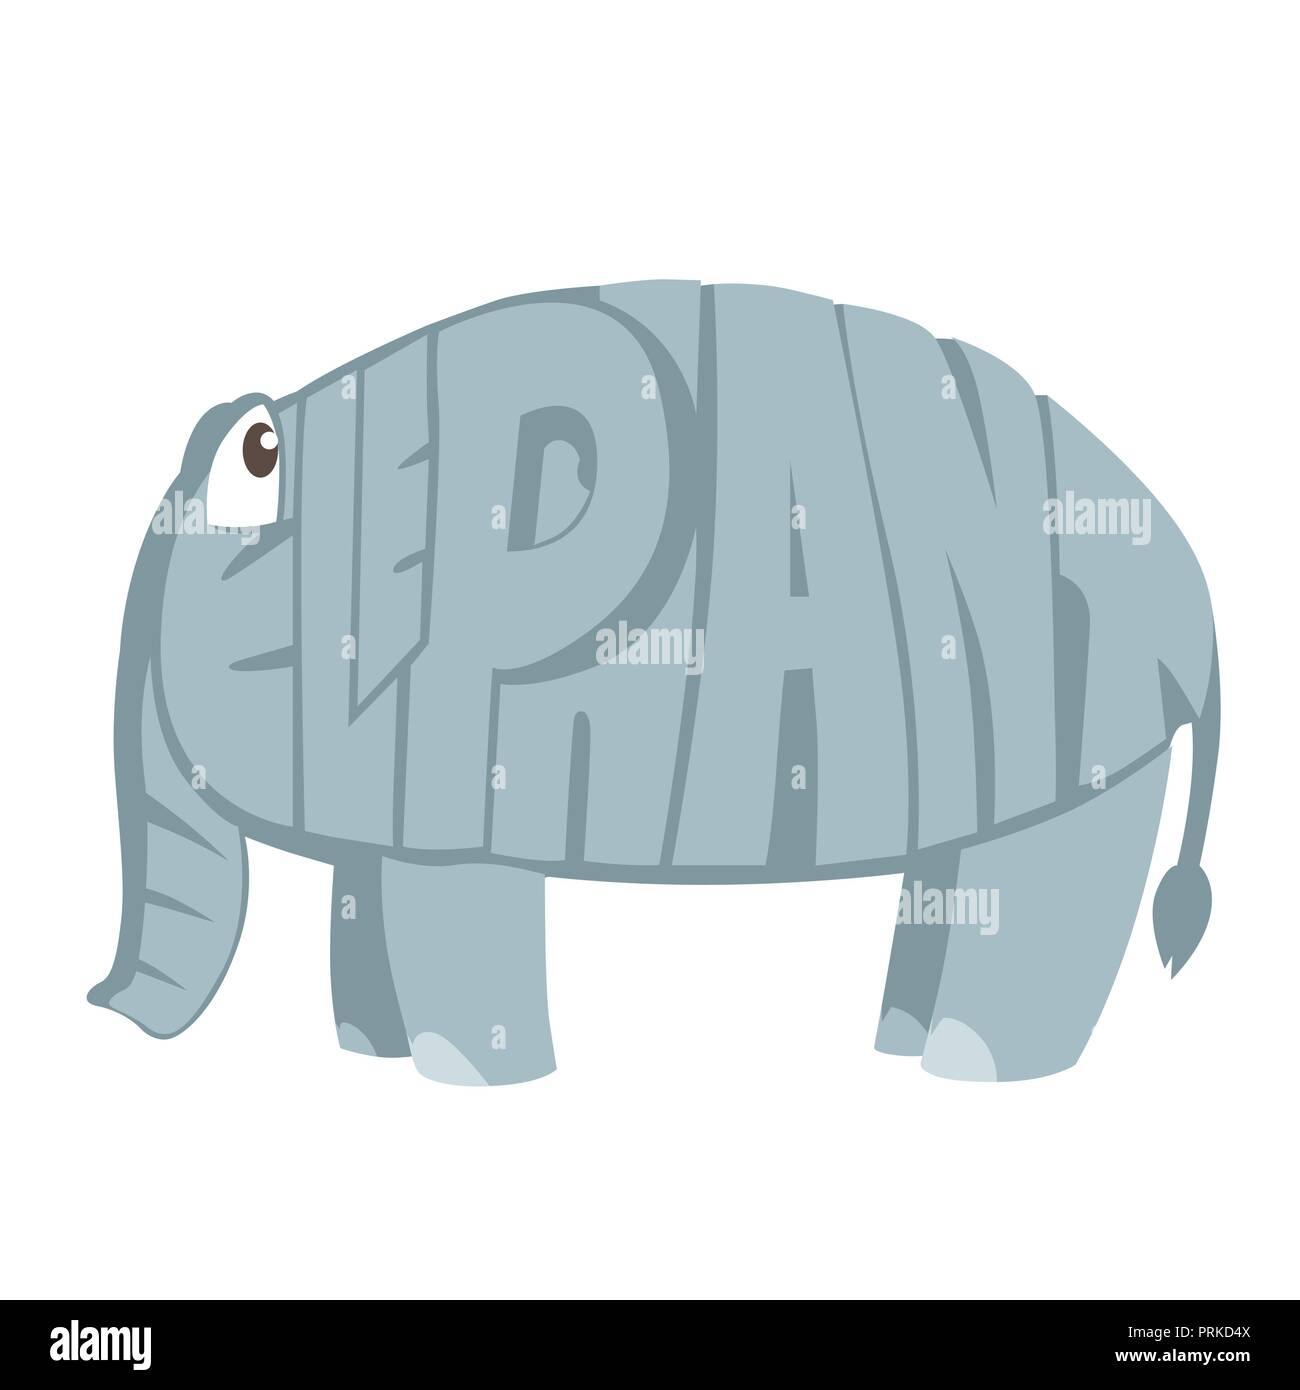 Un vecteur illustration de Elephant Cartoon Animal en lettres Illustration de Vecteur